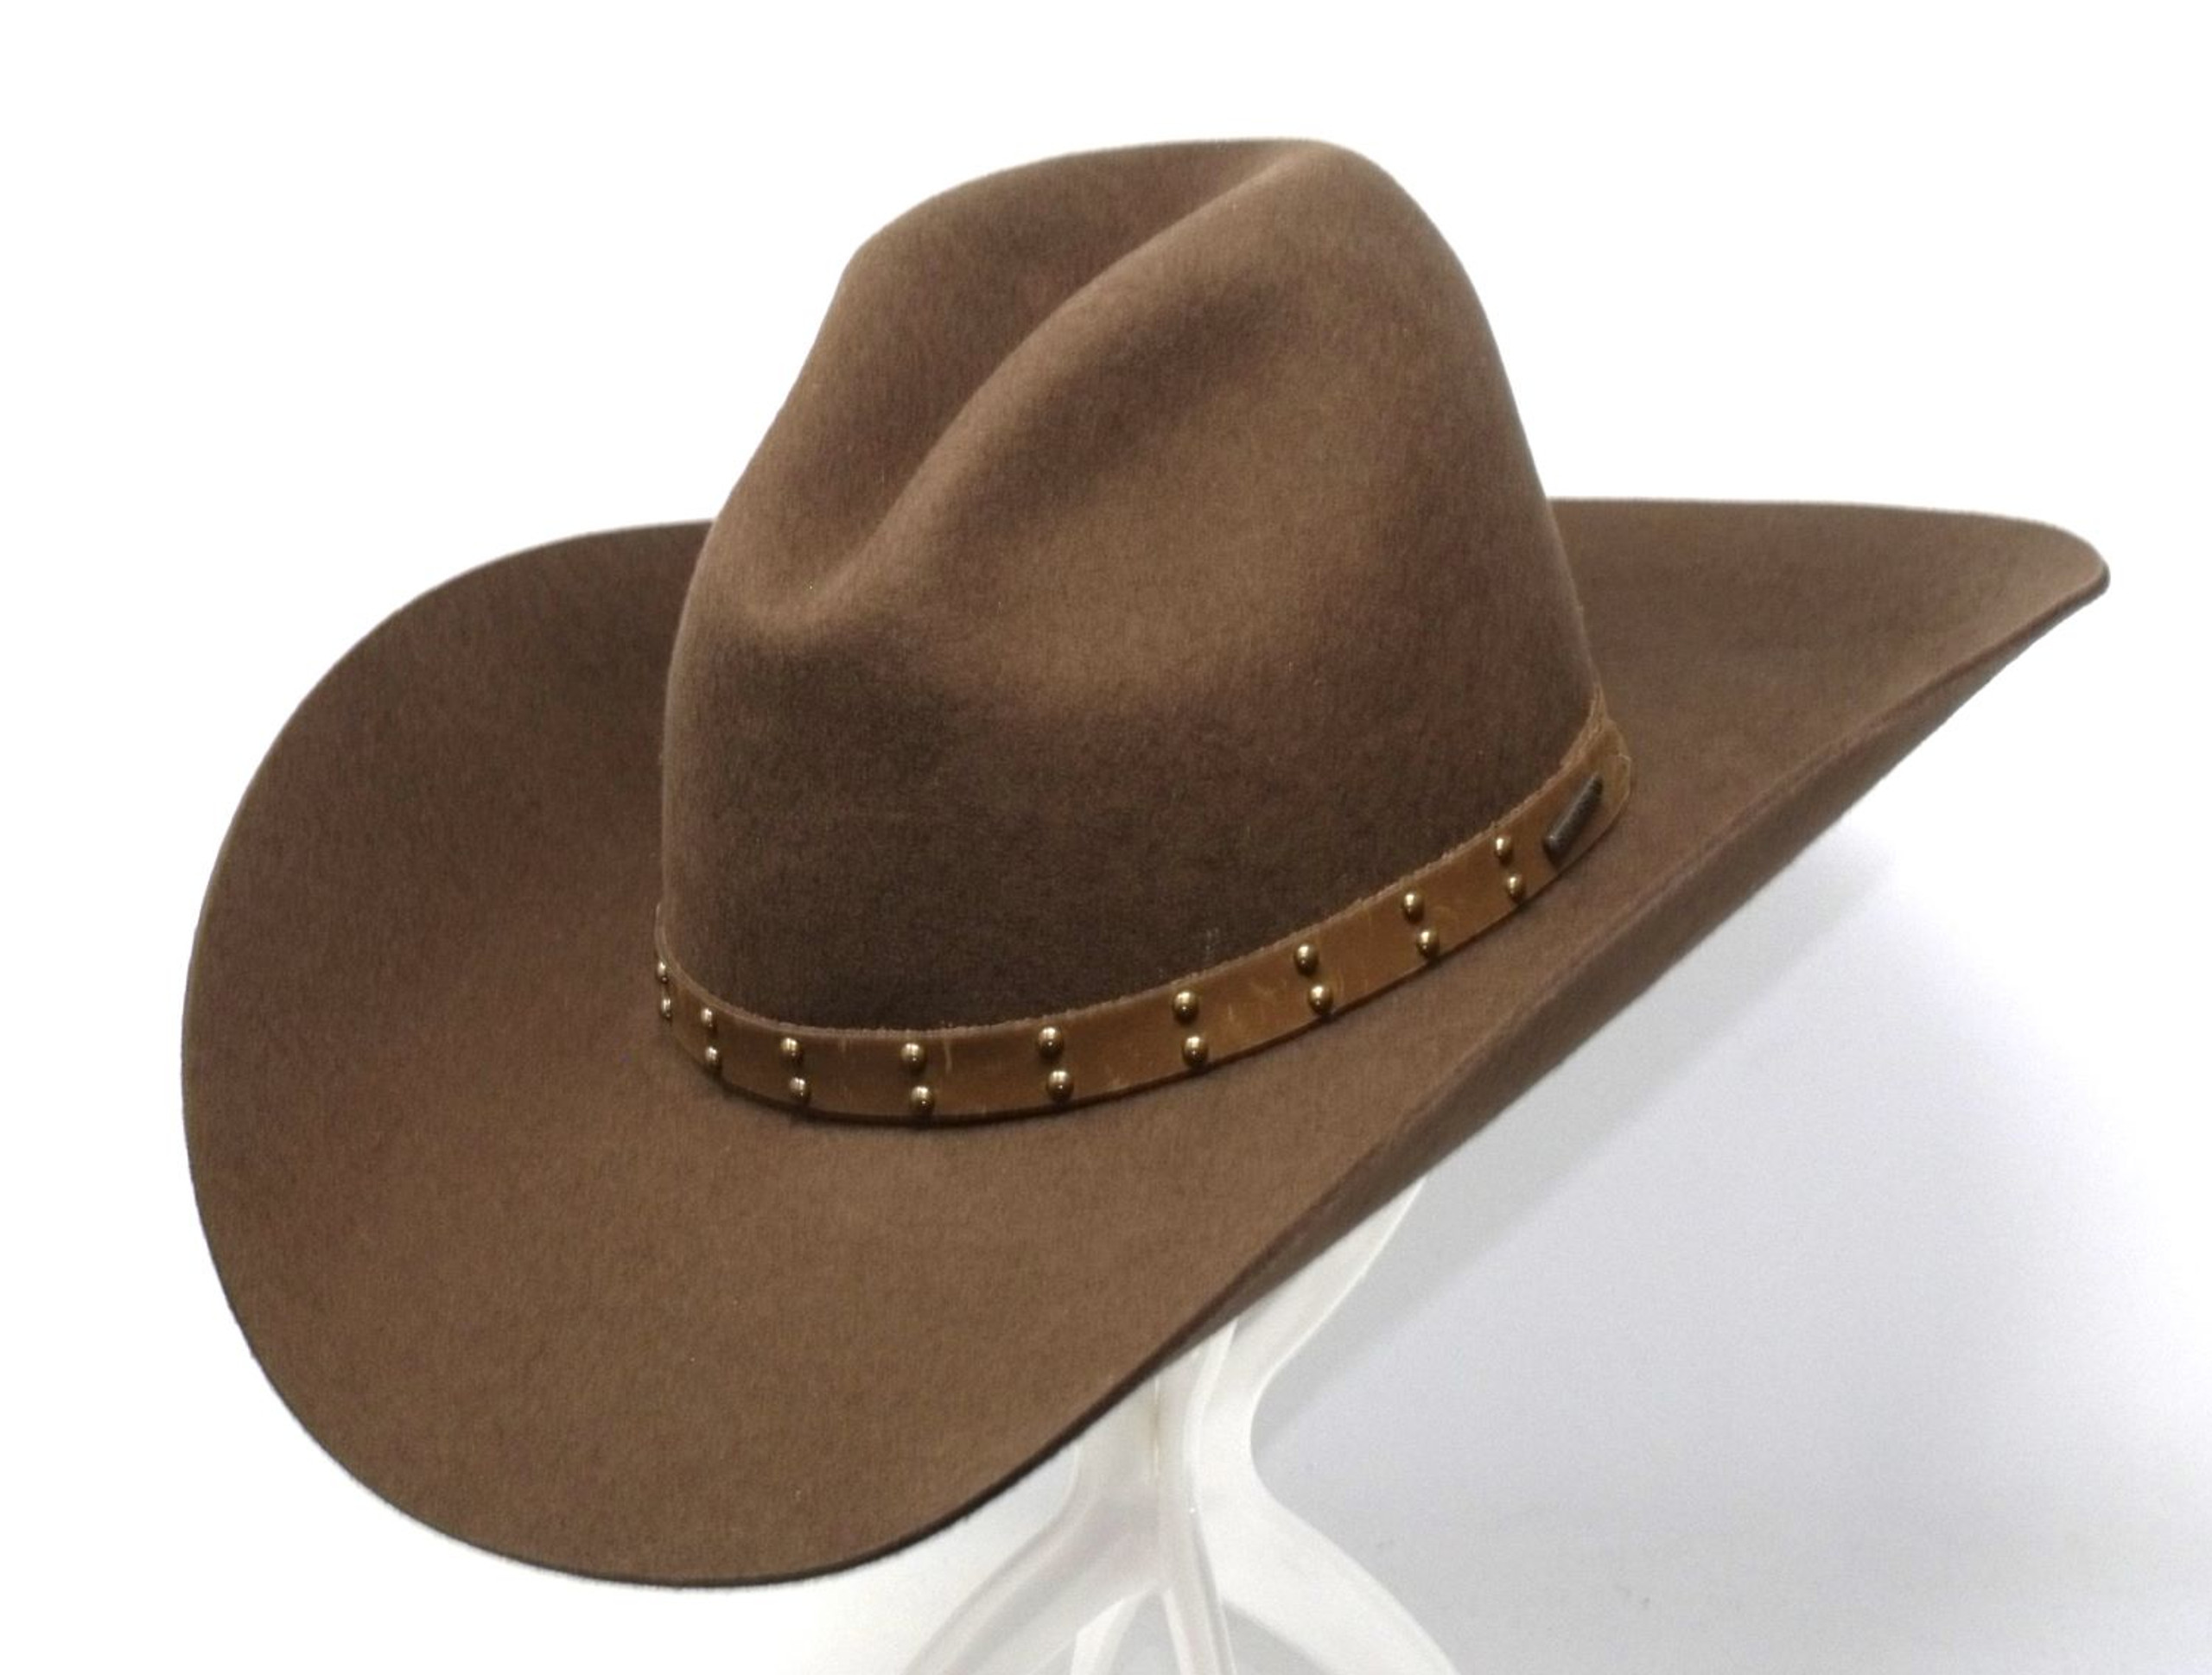 Stetson Gus 6X Fur Felt Cowboy Hat - One 2 mini Ranch